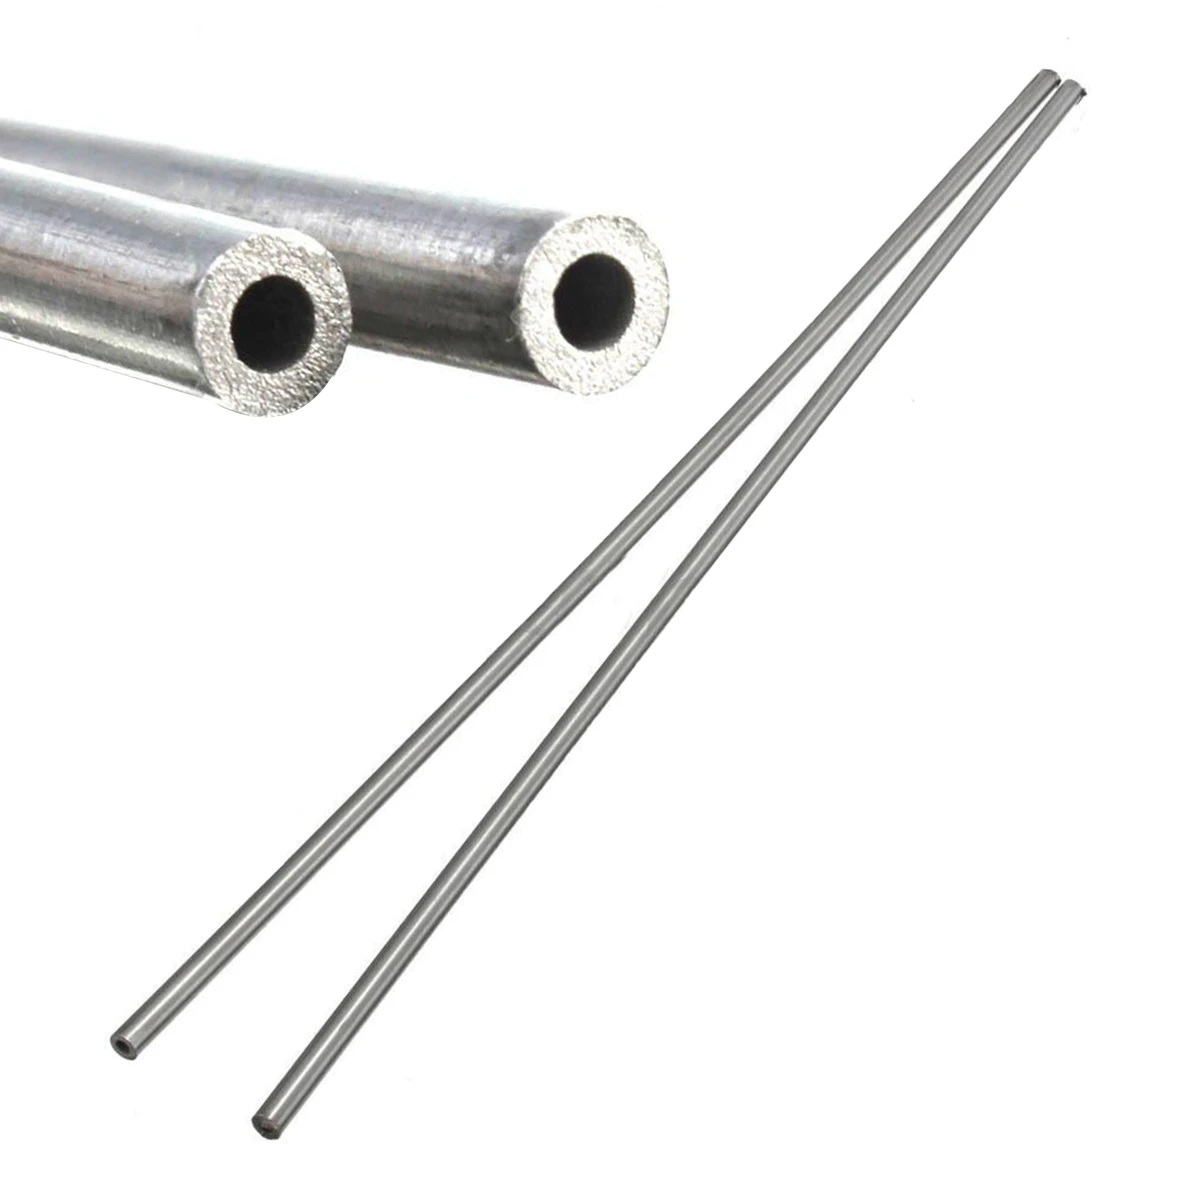 Length 250mm Metal Tool .sZD 304 Stainless Steel Capillary Tube OD 4mm x 3mm ID